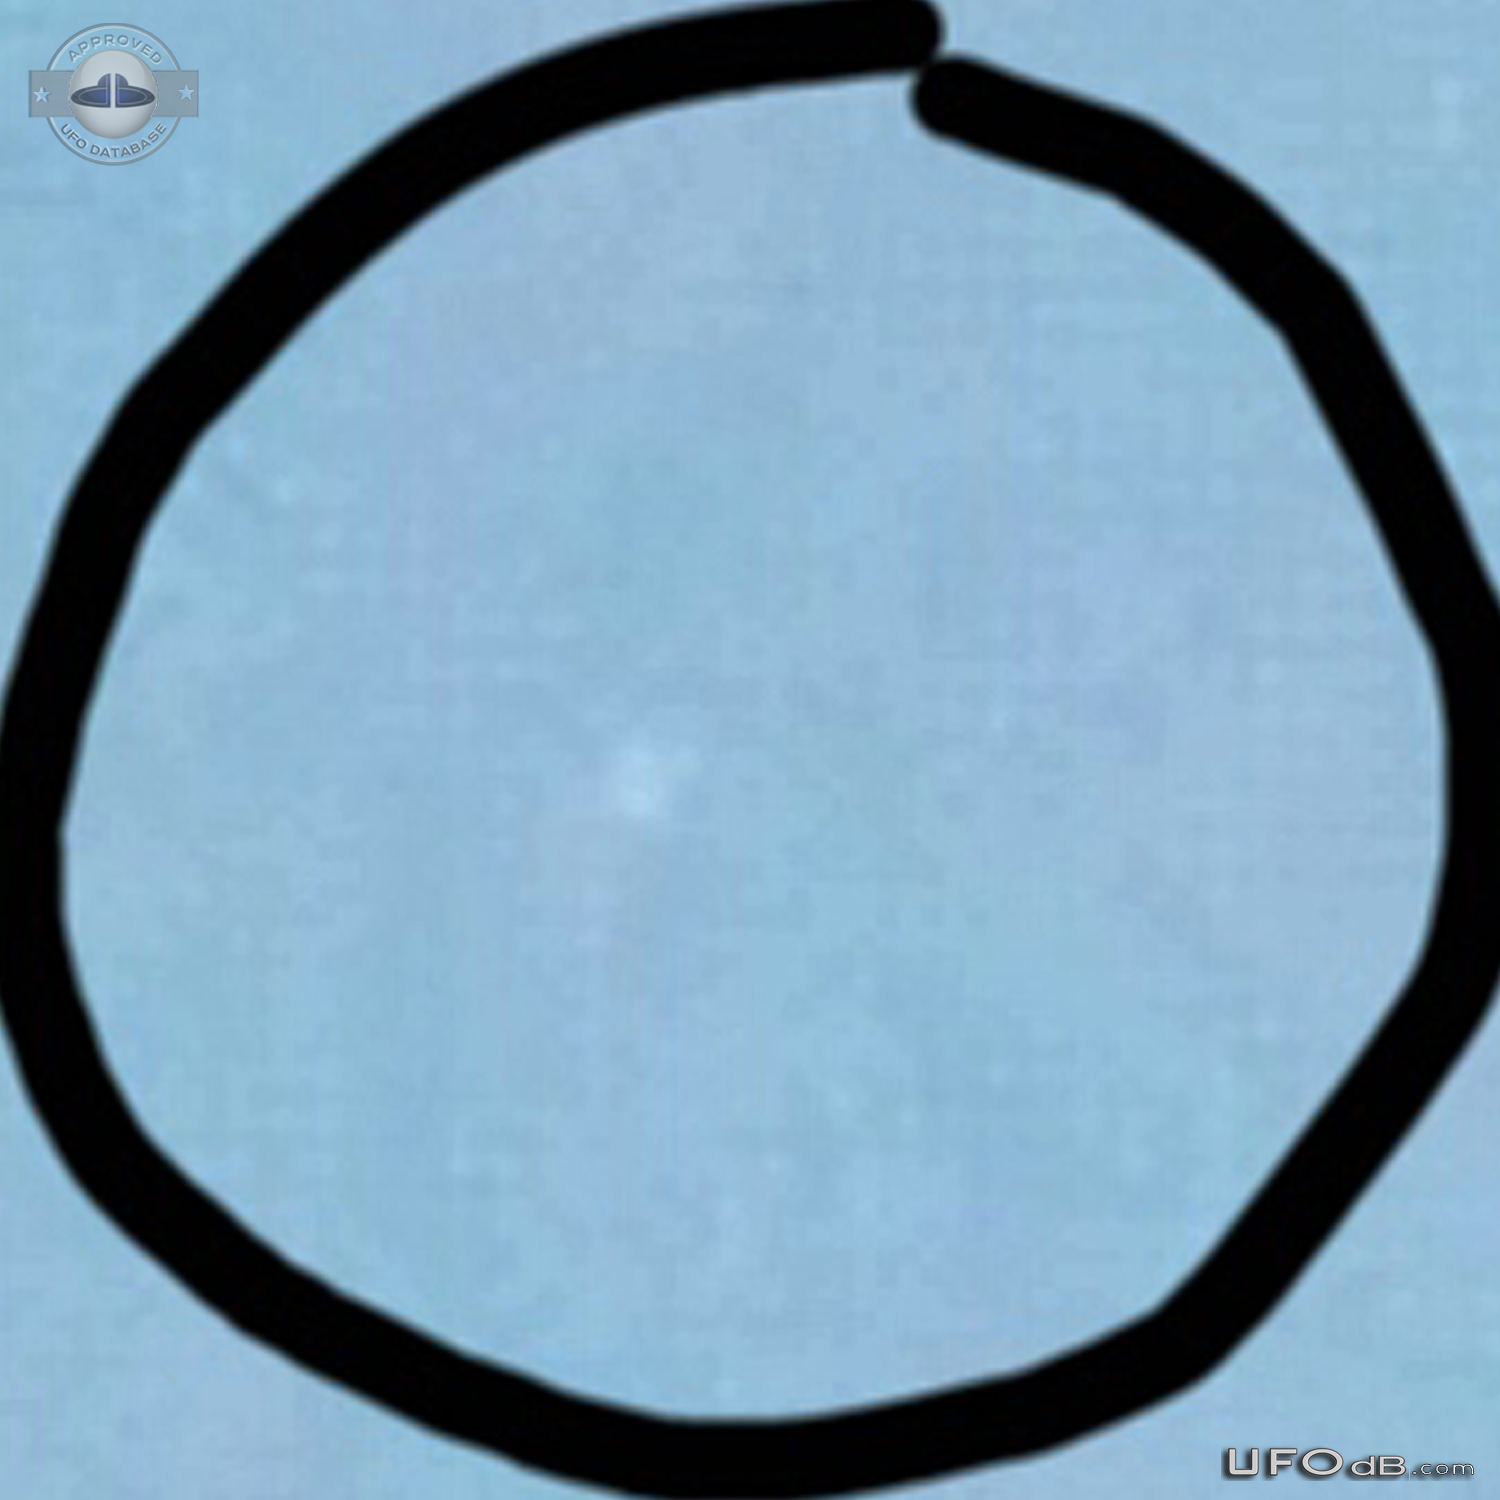 White disc shaped UFO sighting over Saint Marys Georgia USA 2015 UFO Picture #680-4